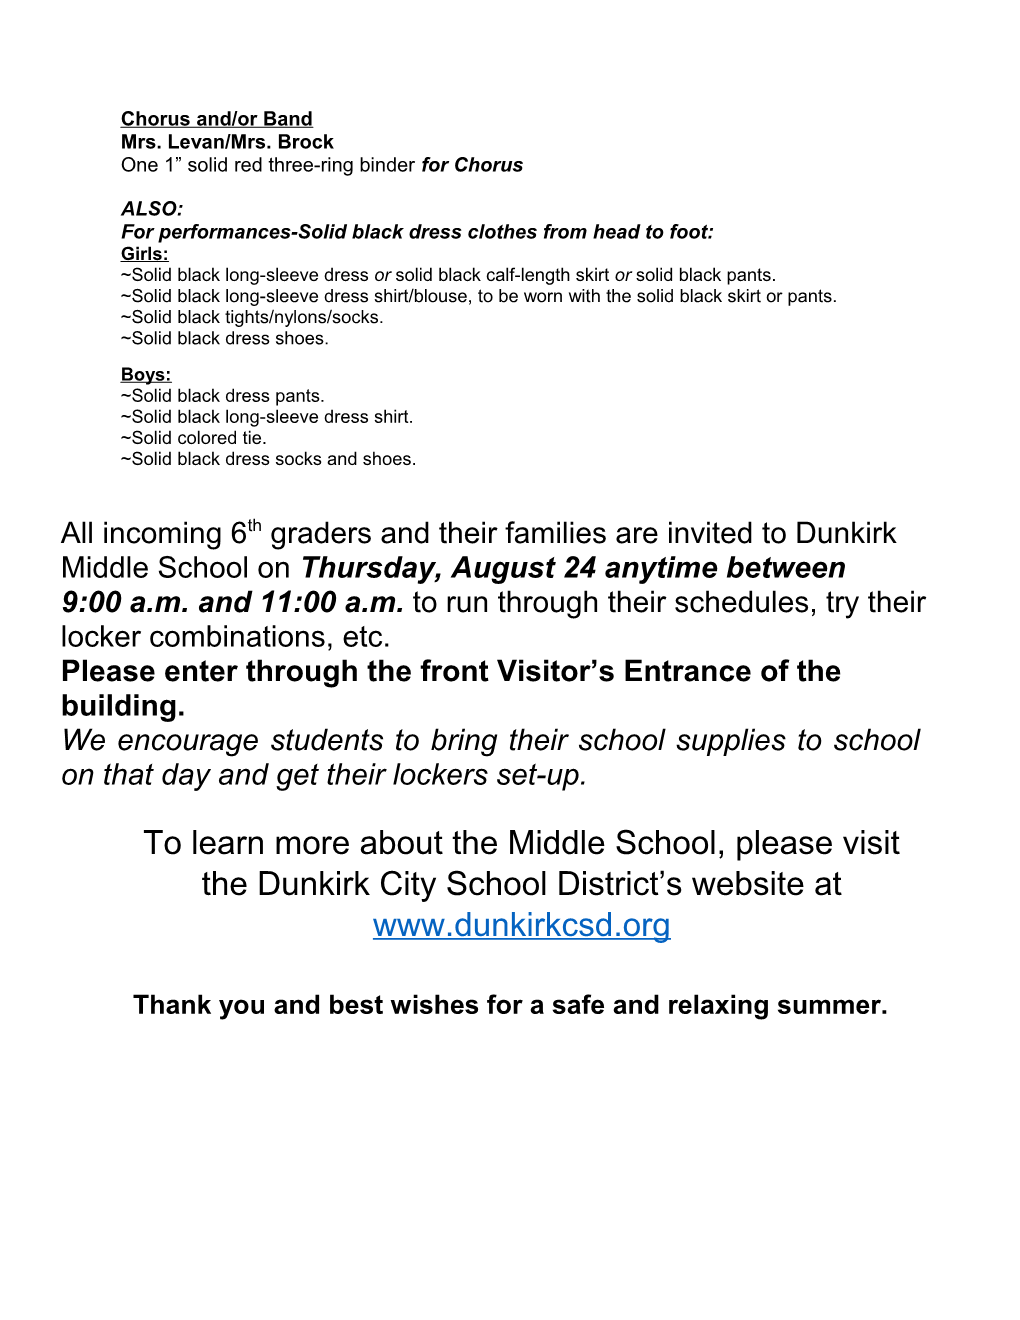 Dunkirk Middle School